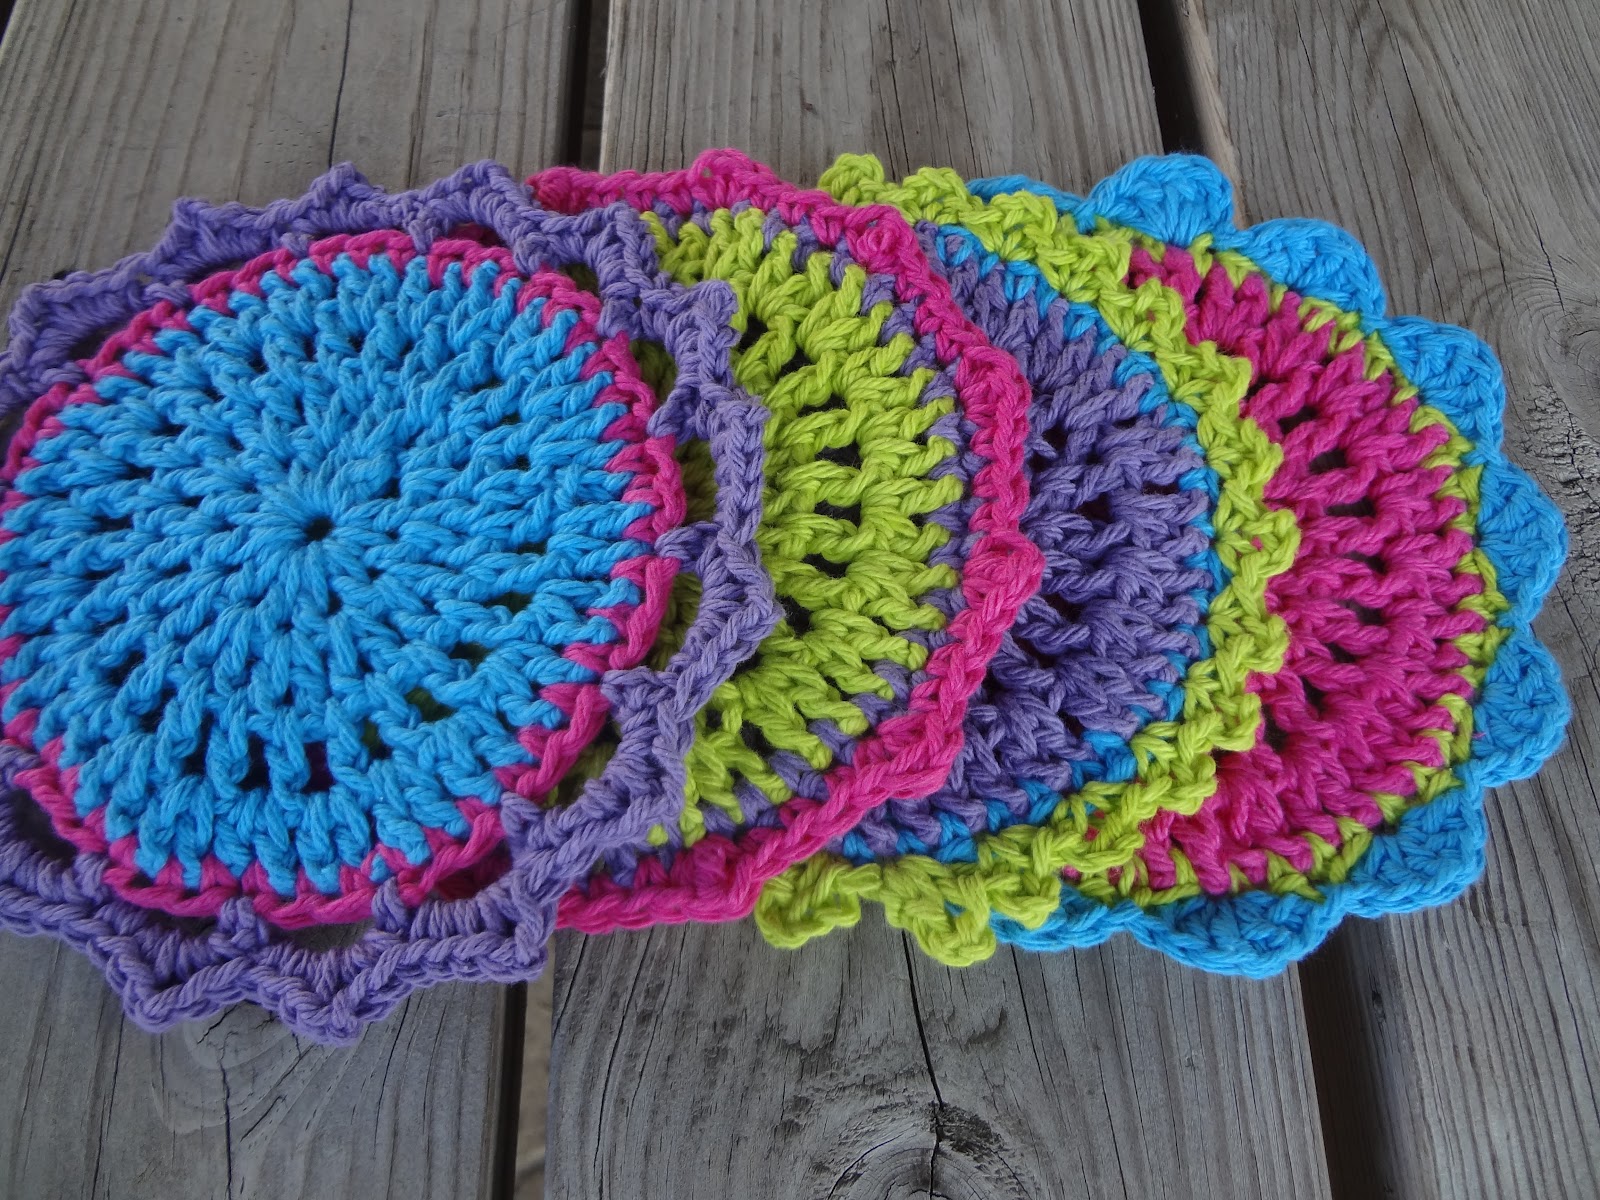 20 Crochet Dishcloth Patterns Guide Patterns